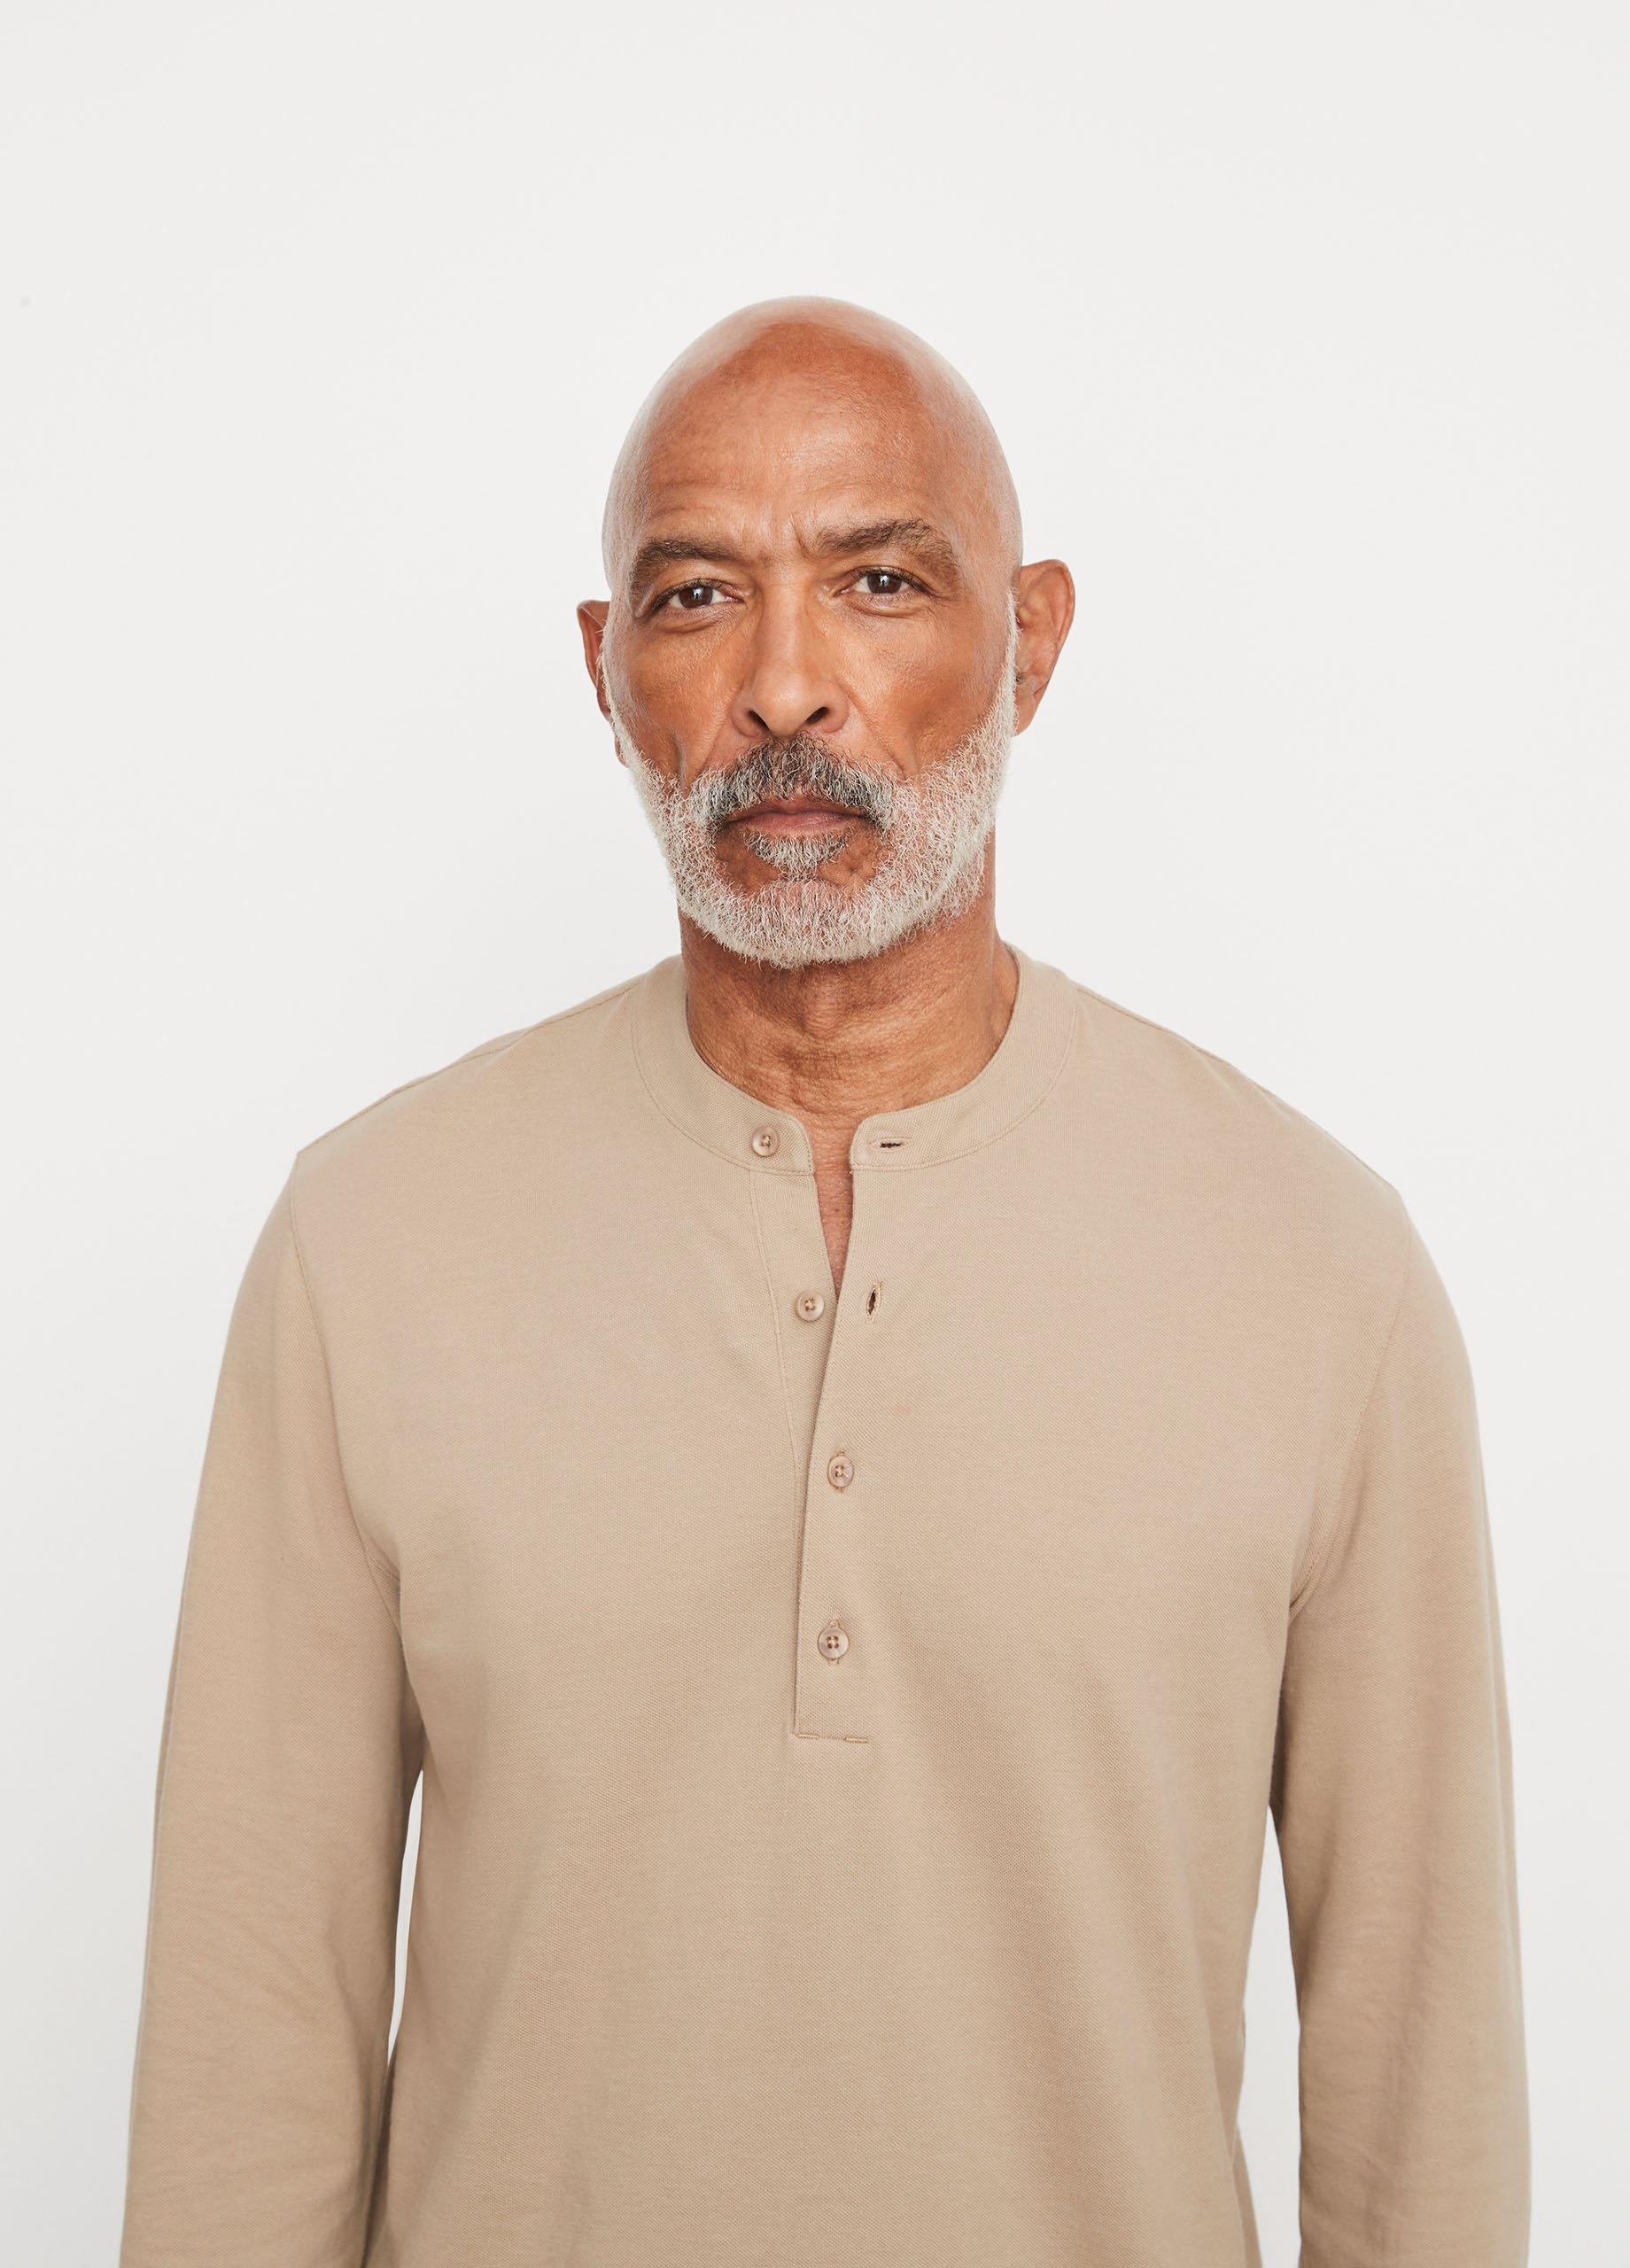 Proto101 Men's Classic Long-Sleeve Henley Shirt